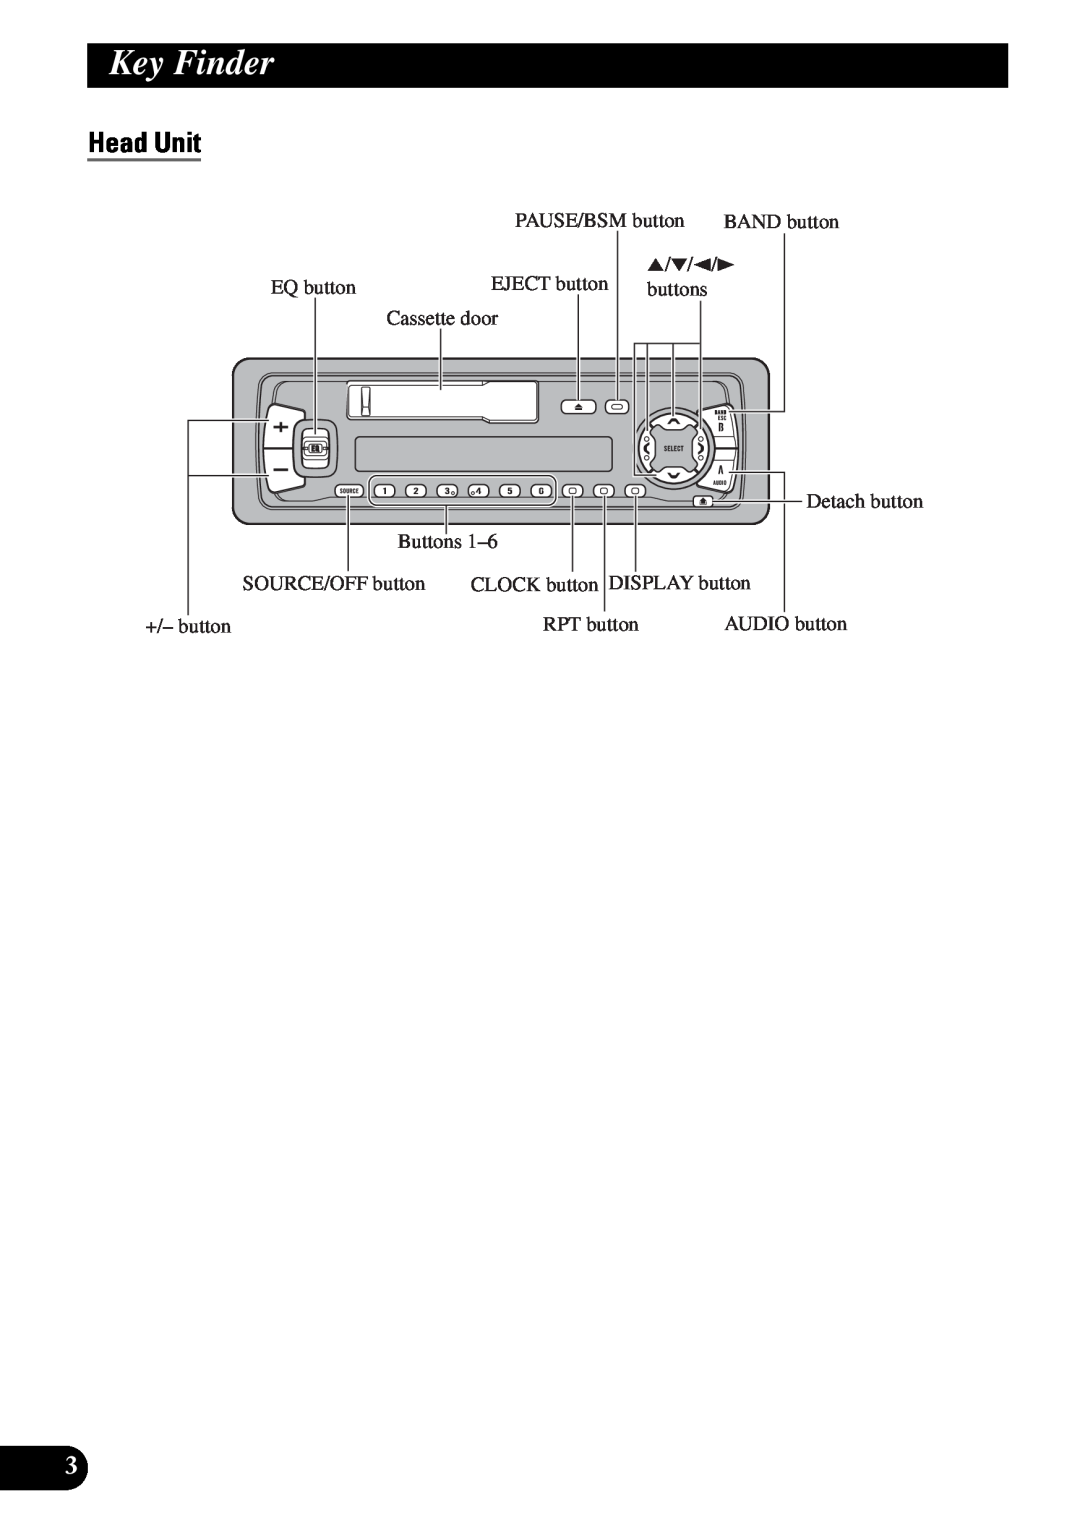 Pioneer KEH-P4950 operation manual Key Finder, Head Unit 